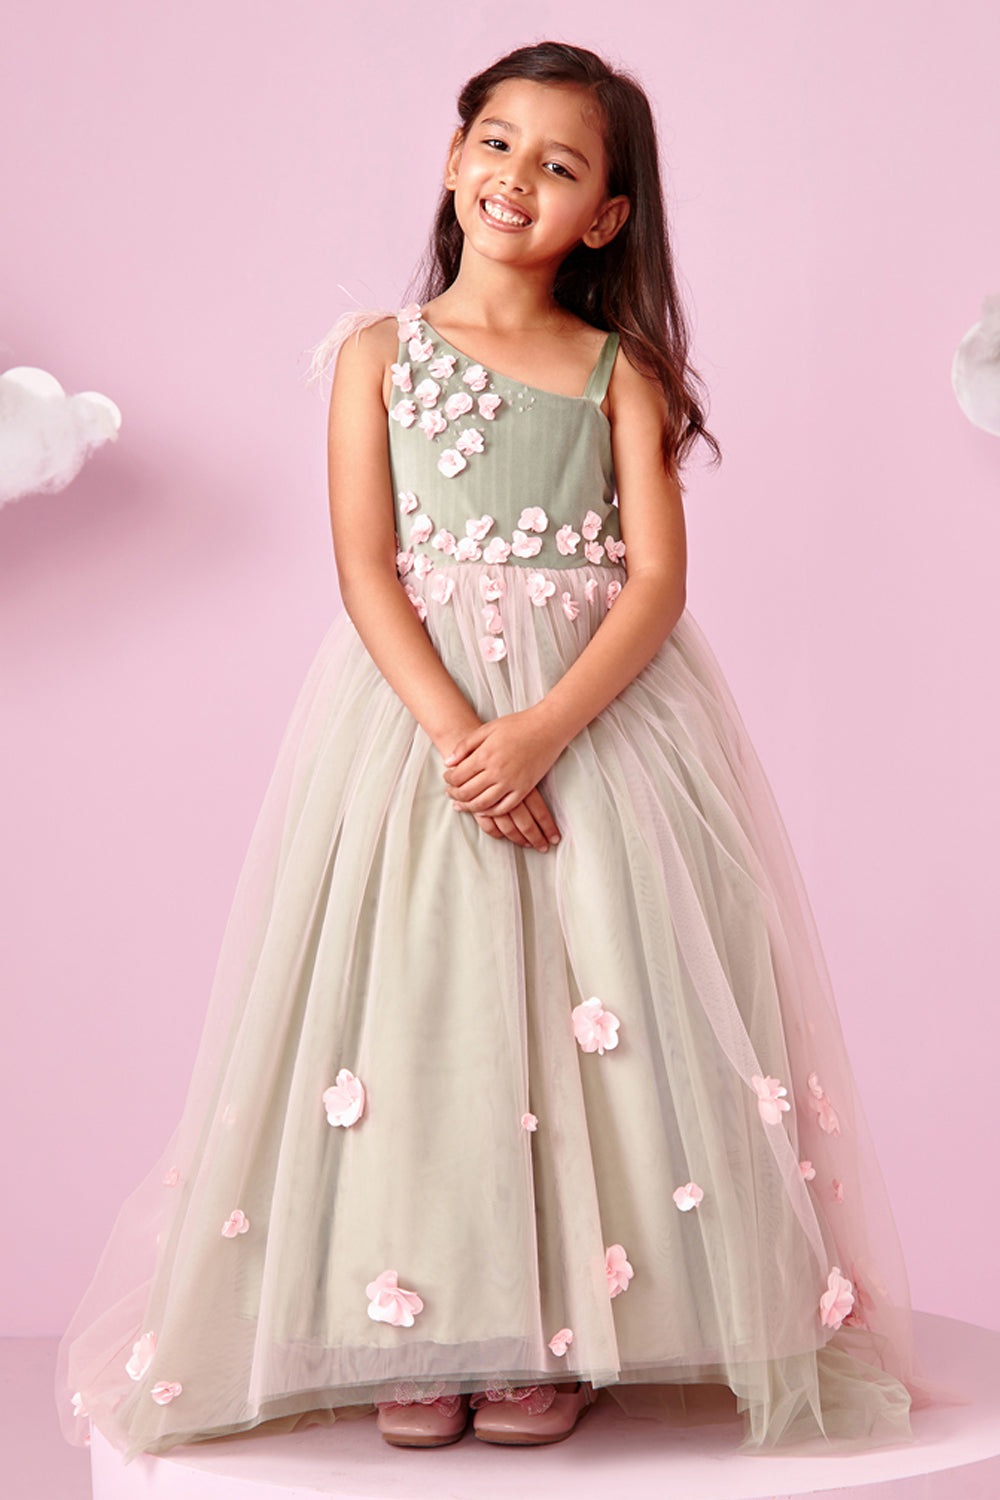 Fairy-Princess Gown